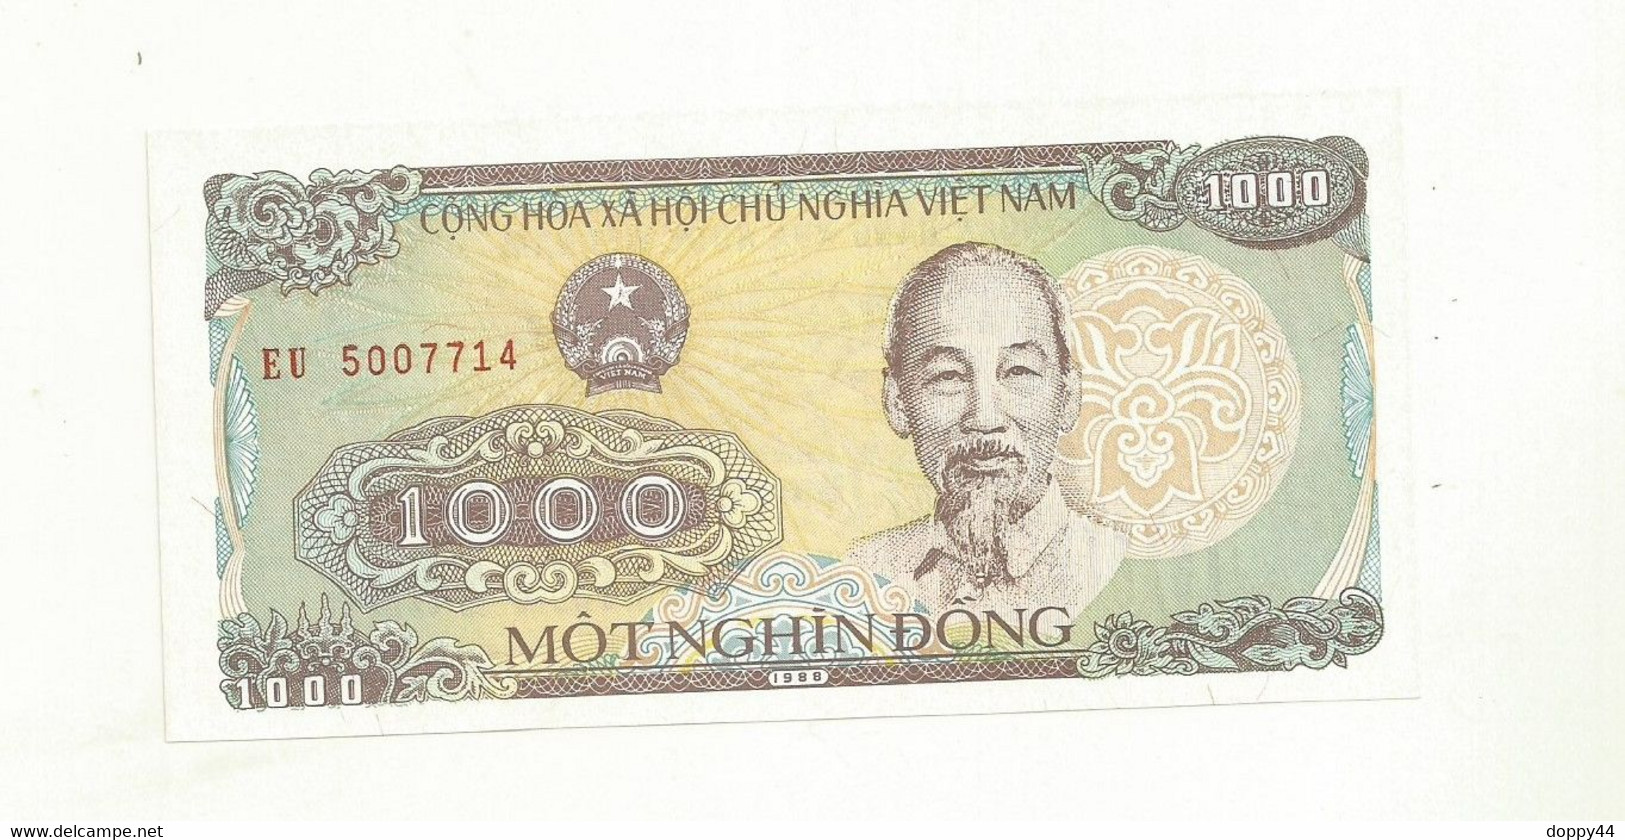 BILLET VIET NAM 1000 DONG EMIS EN 1988 NEUF SUPERBE. - Vietnam